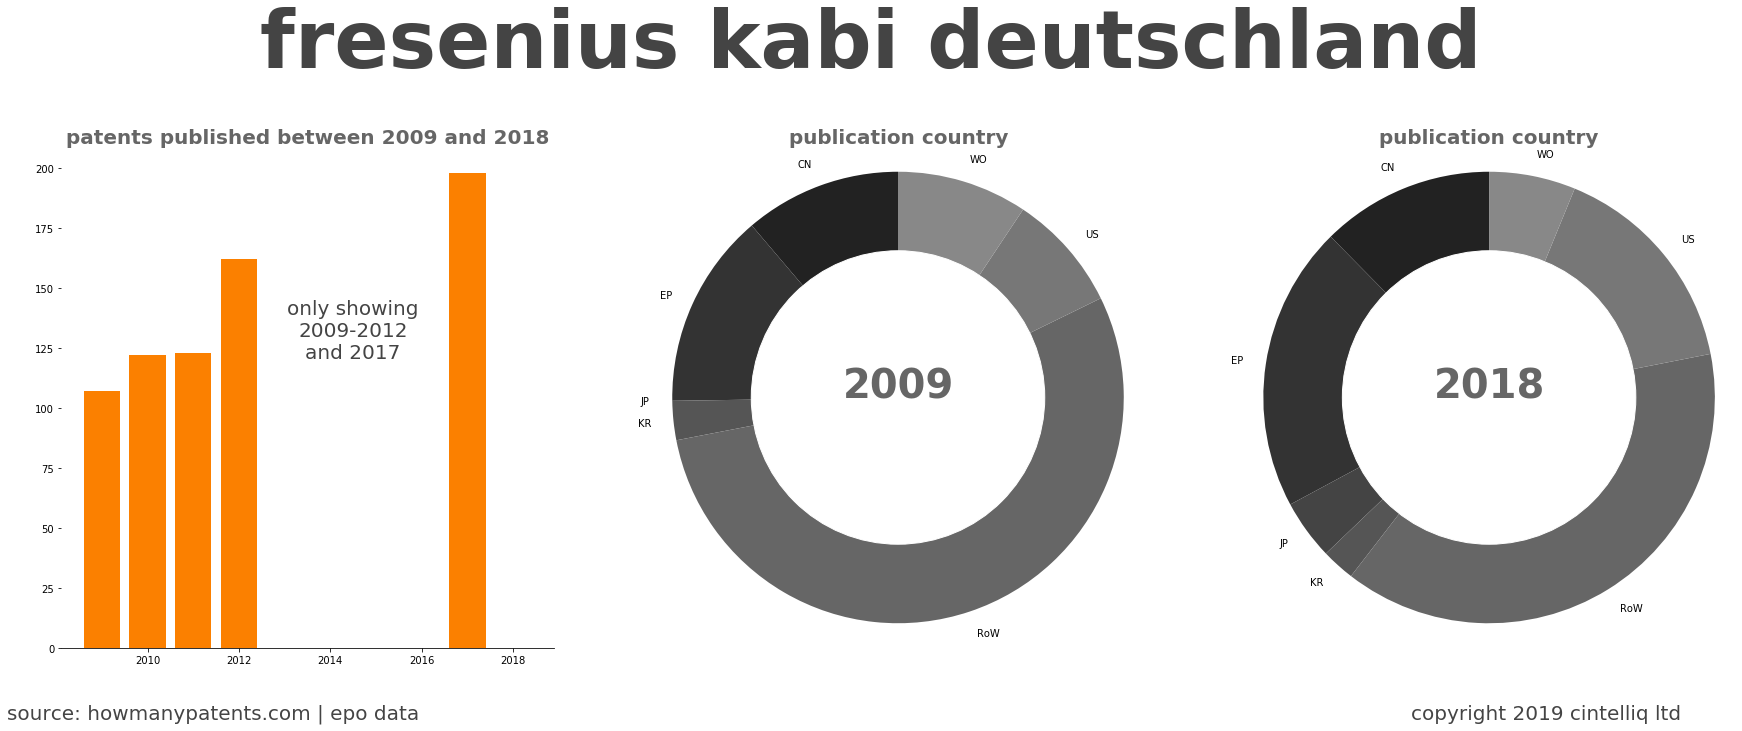 summary of patents for Fresenius Kabi Deutschland